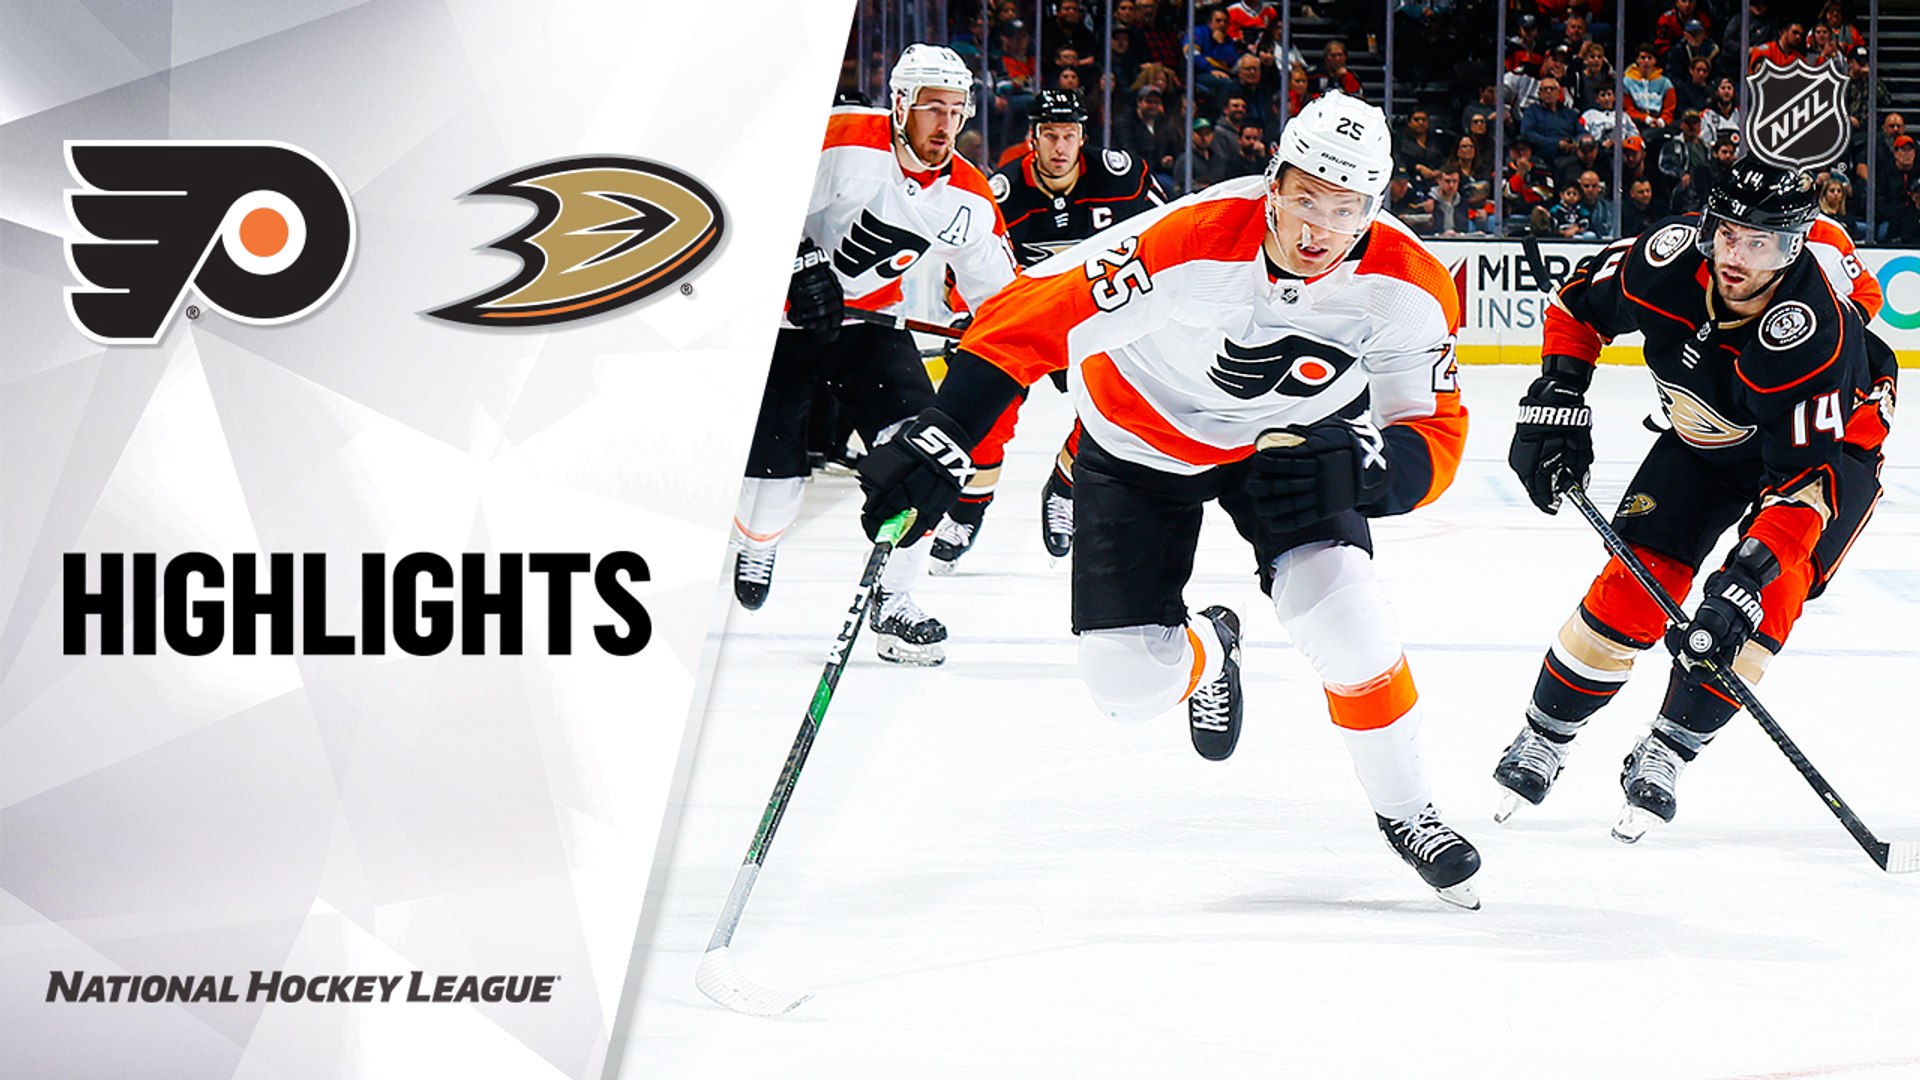 NHL Highlights | Flyers @ Ducks 12/29 